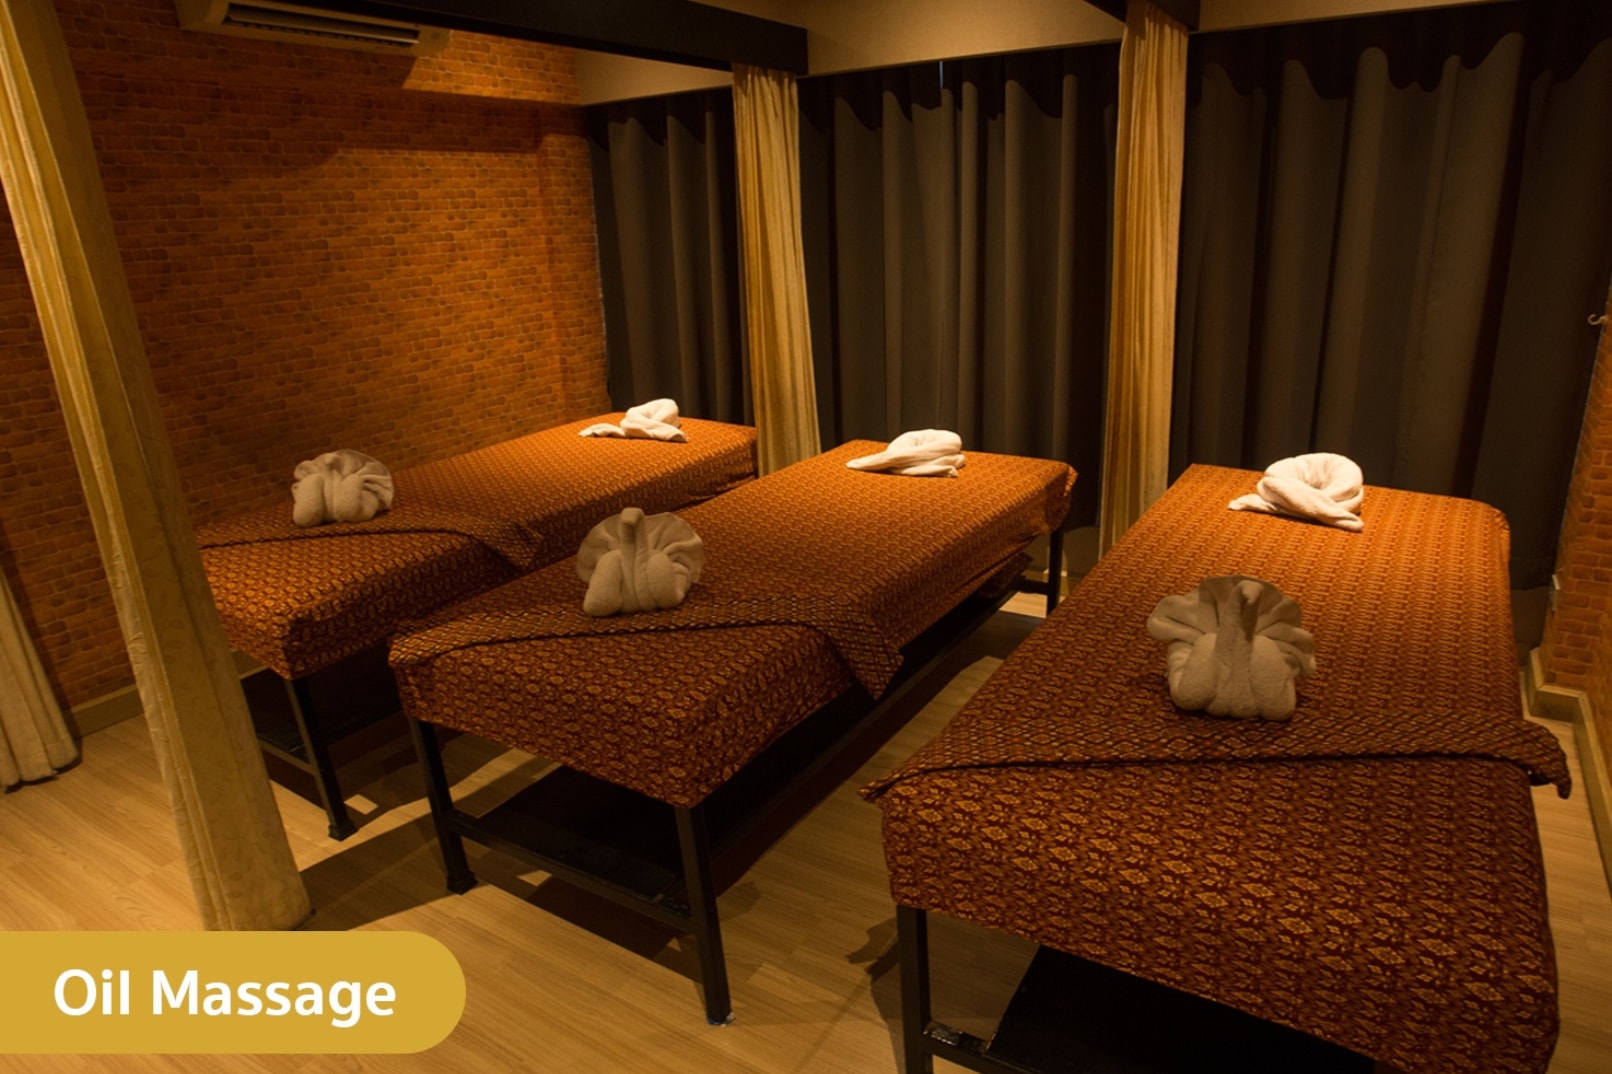 Lek Massage 專注於一系列傳統和正宗的按摩，包括足部反射療法、泰式按摩、香薰精油按摩